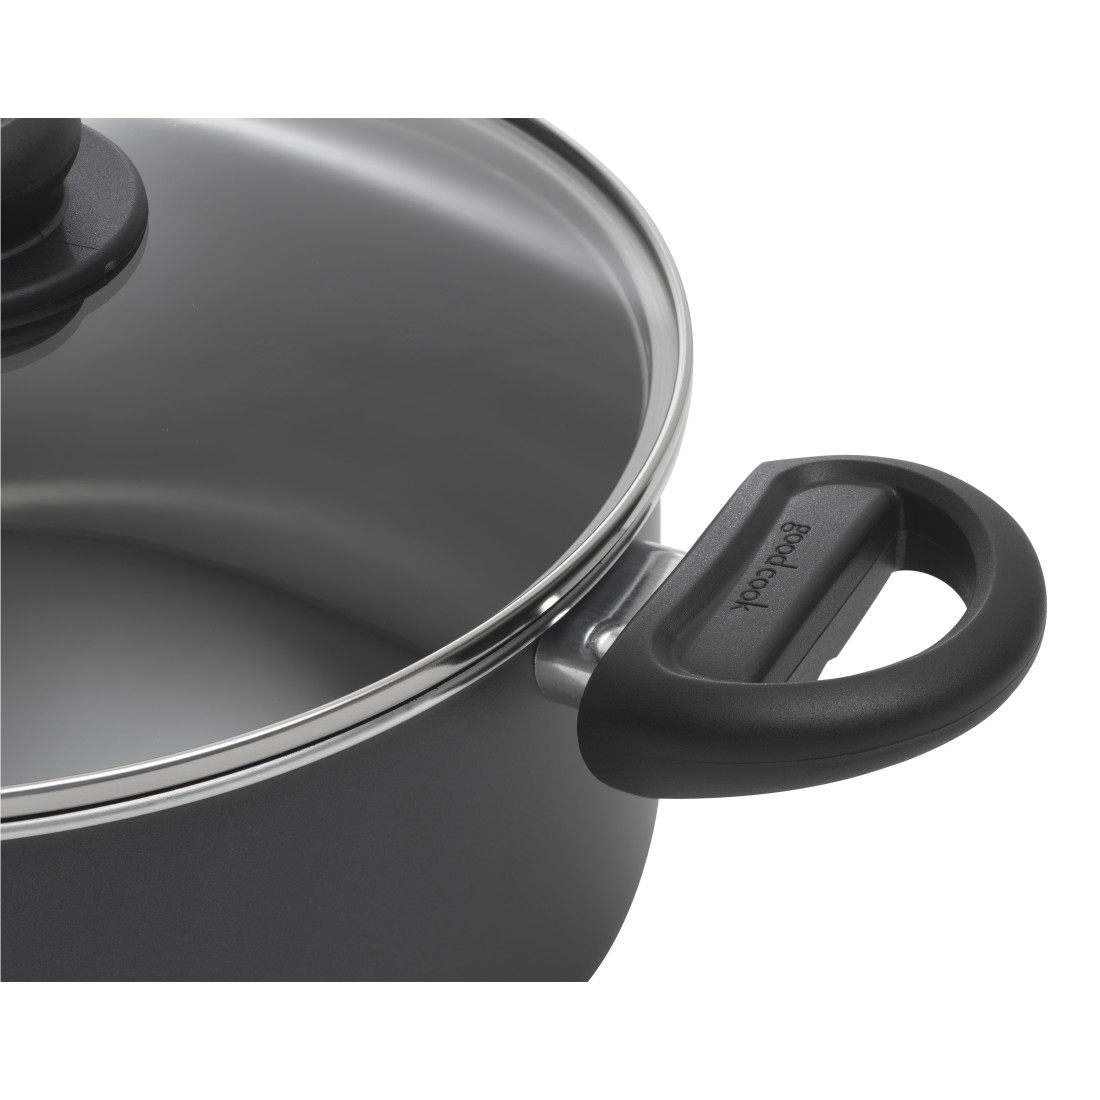 Good Cook 4 Quarts Non-Stick Aluminum Saute Pan with Lid